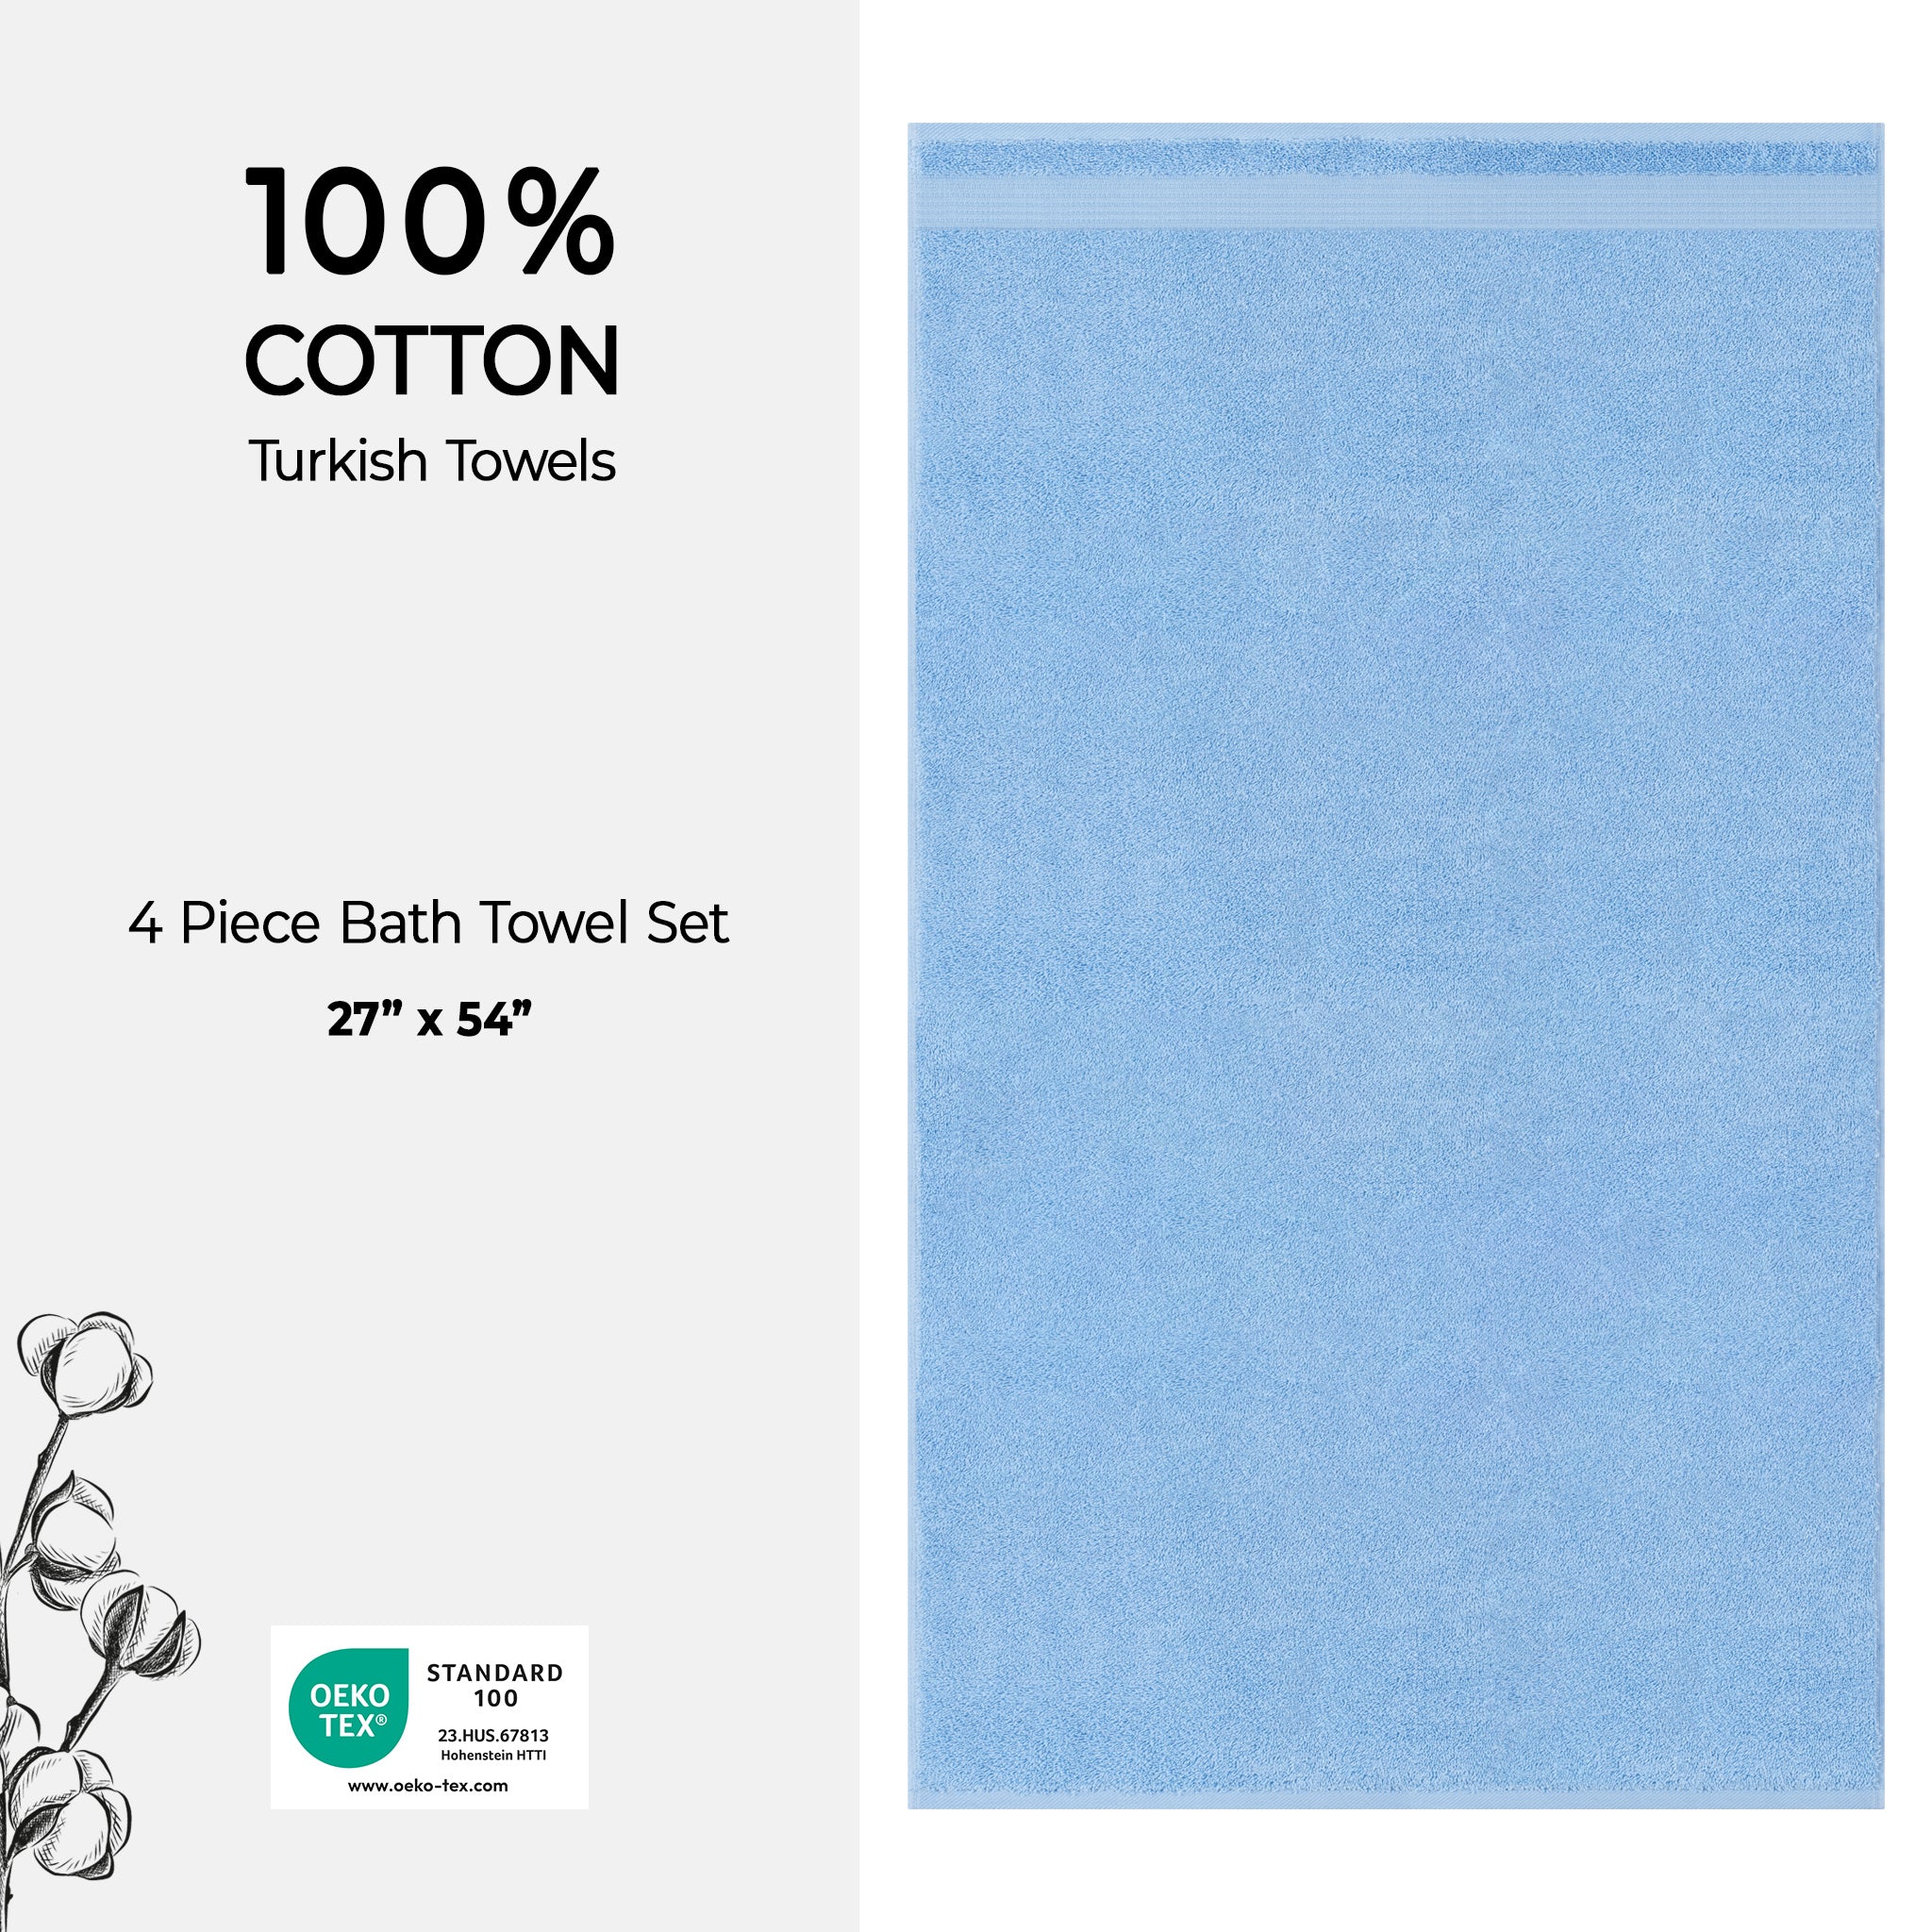 American Soft Linen Bekos 100% Cotton Turkish Towels, 4 Piece Bath Towel Set -sky-blue-04